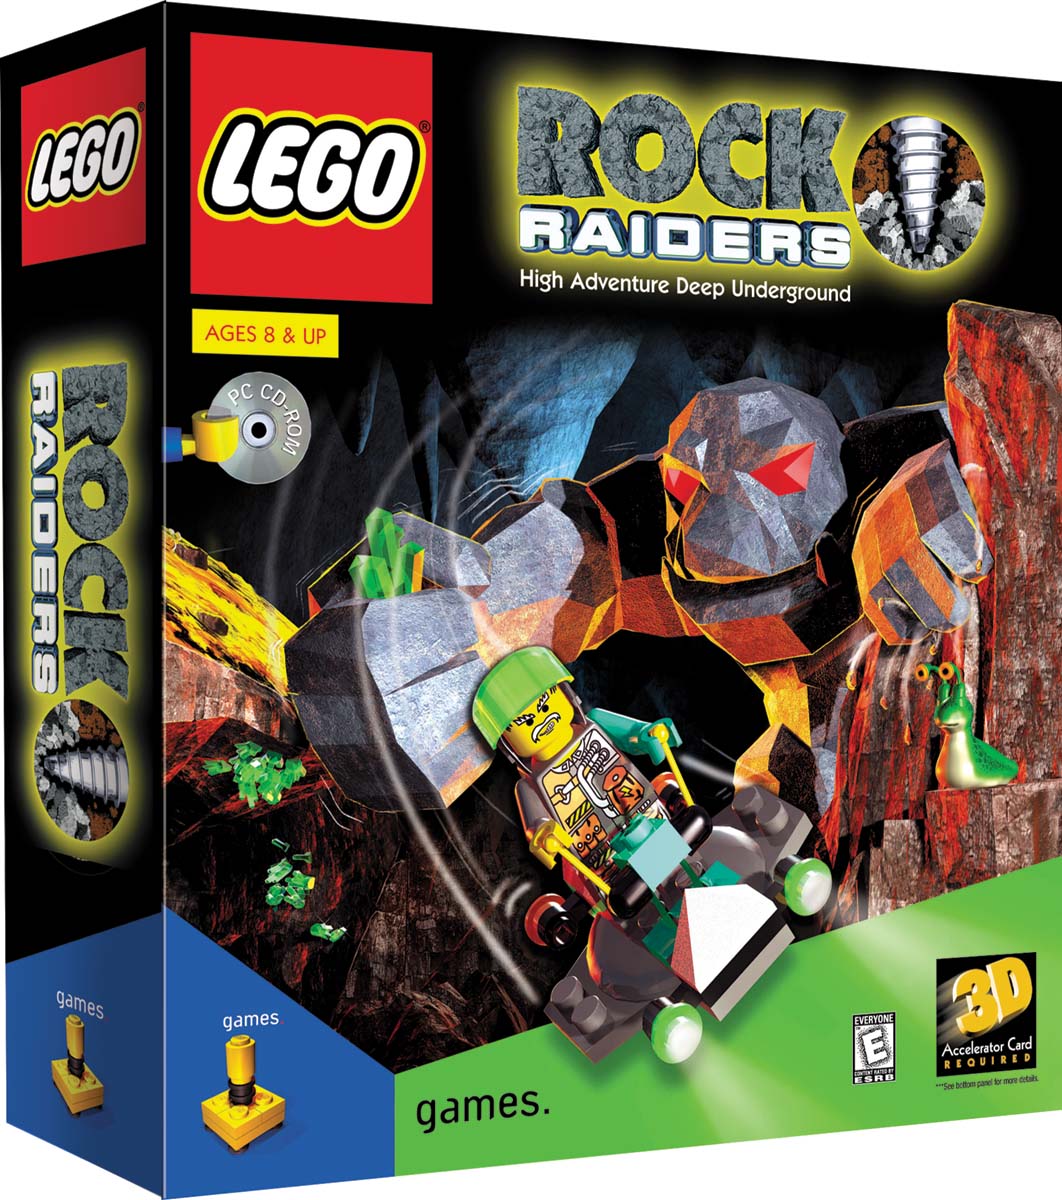 lego rock raiders vehicles